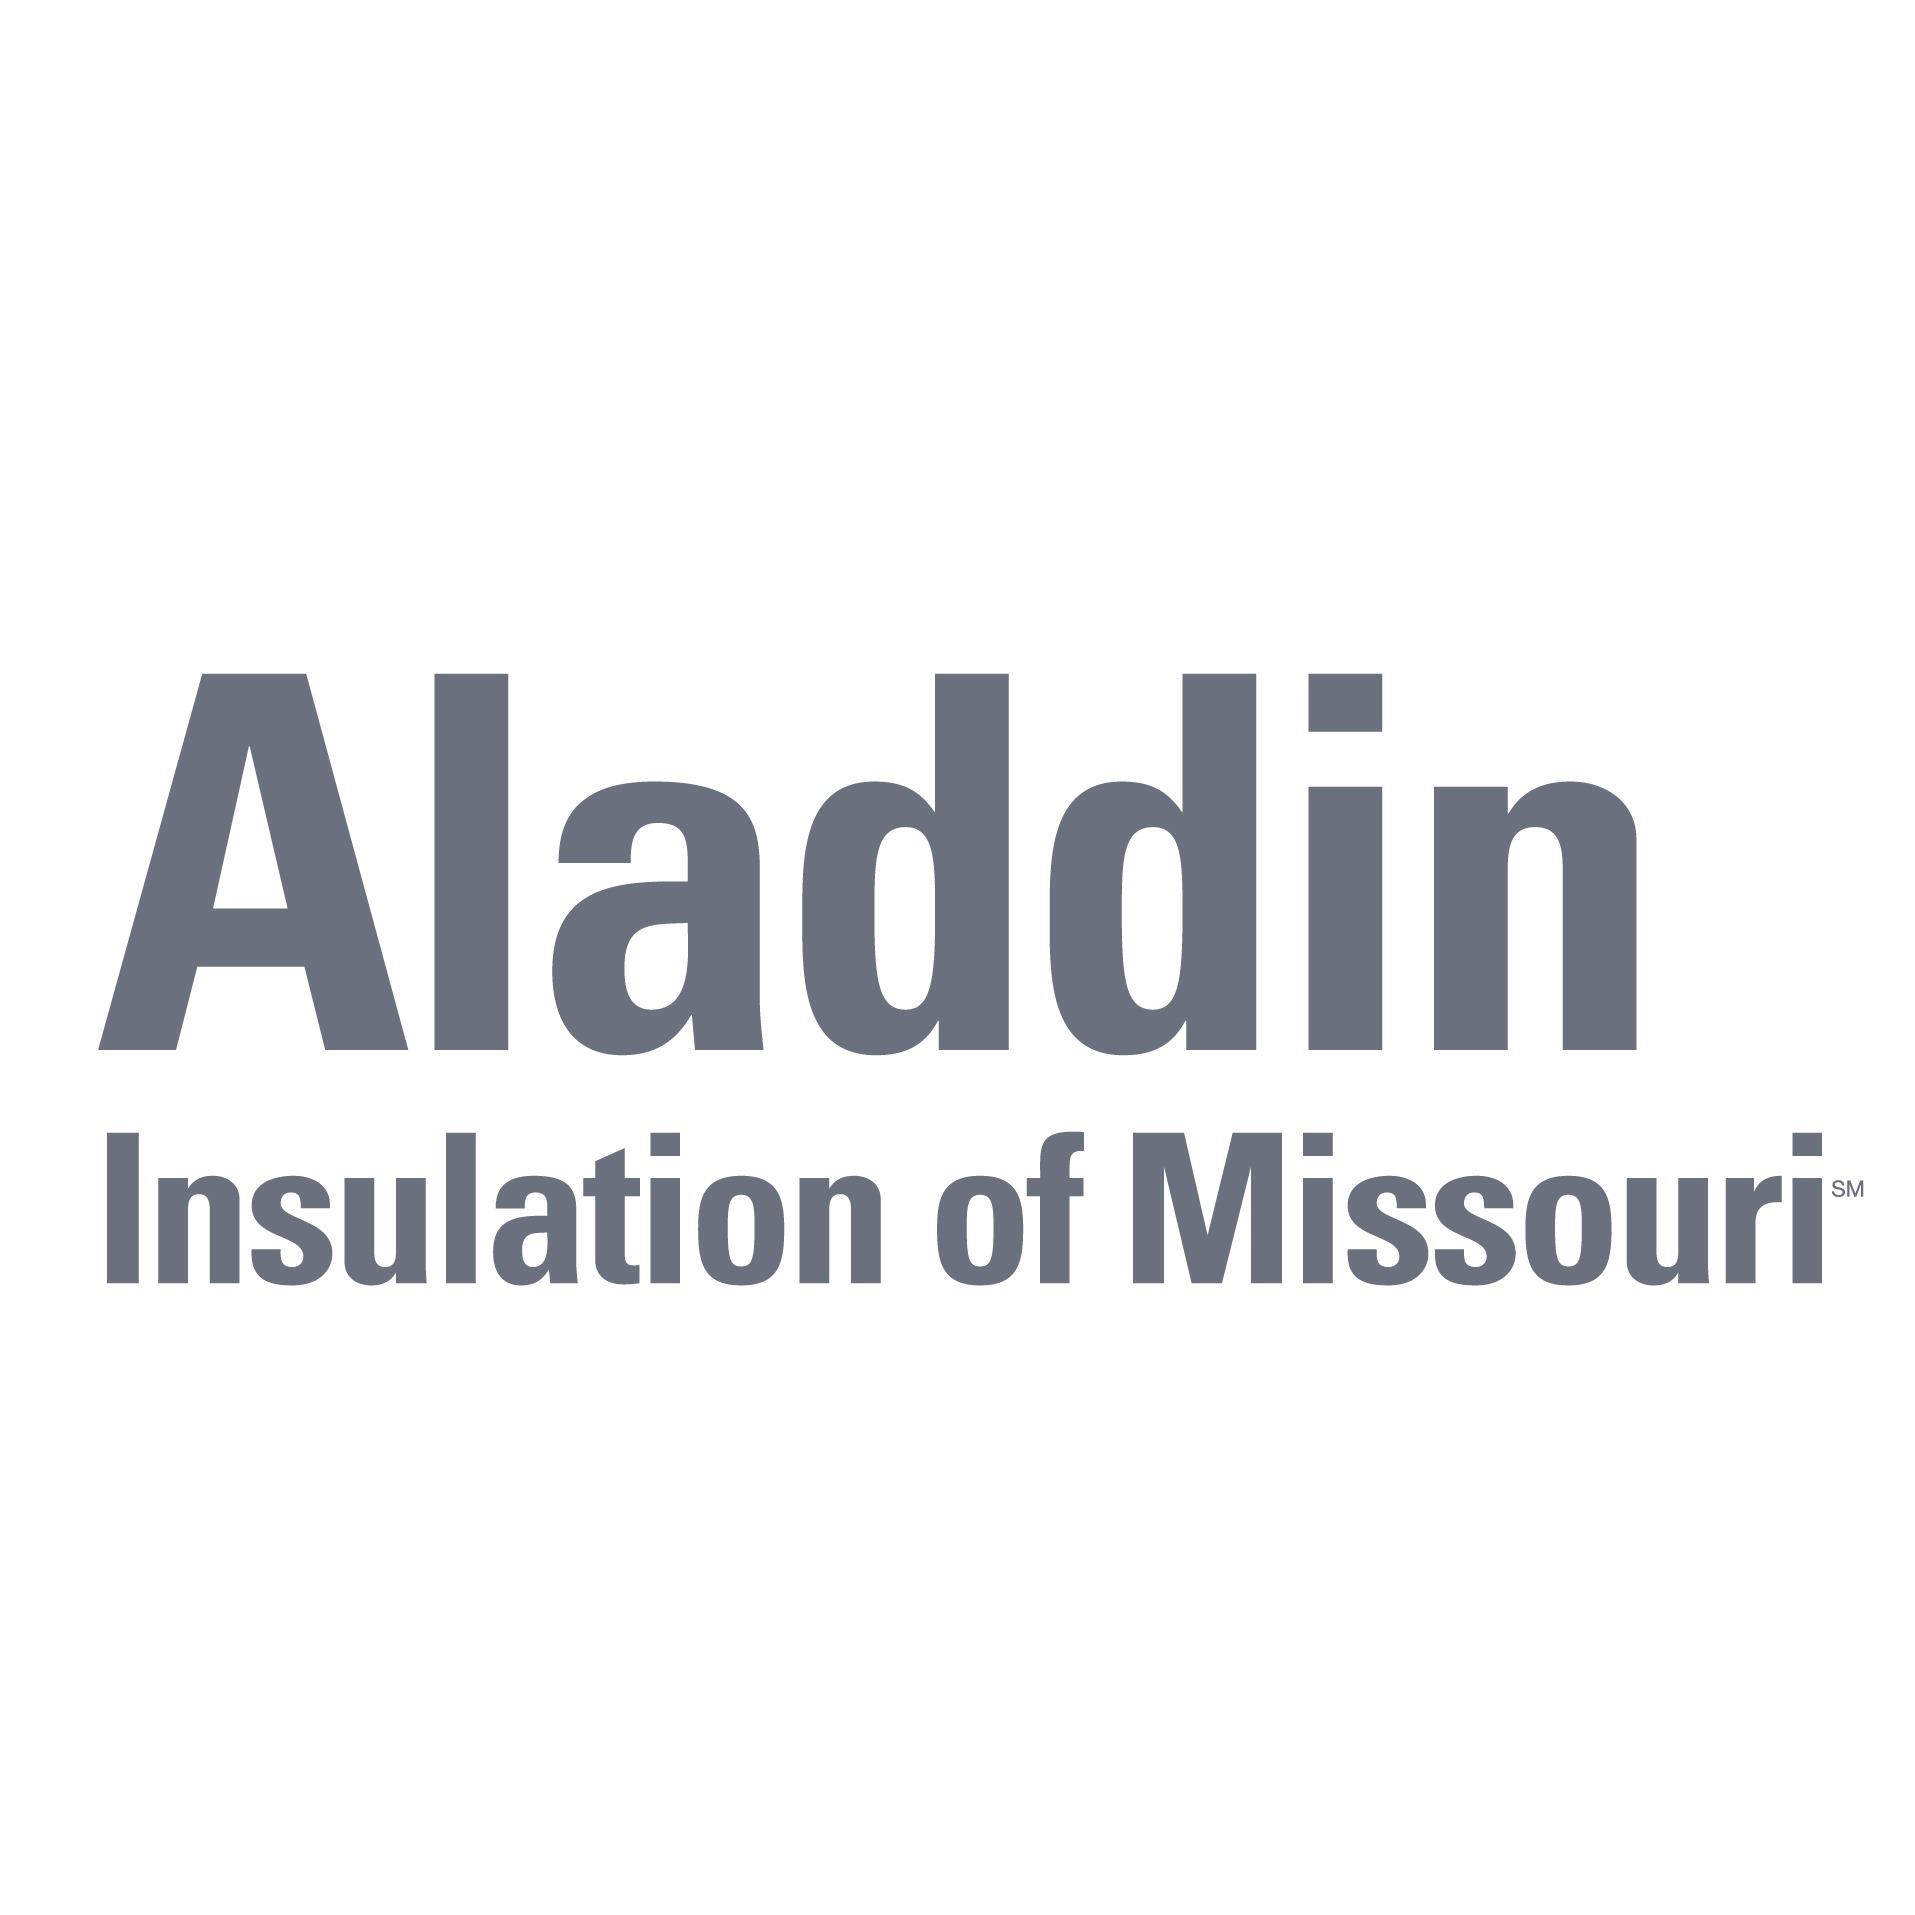 Aladdin Insulation of Missouri